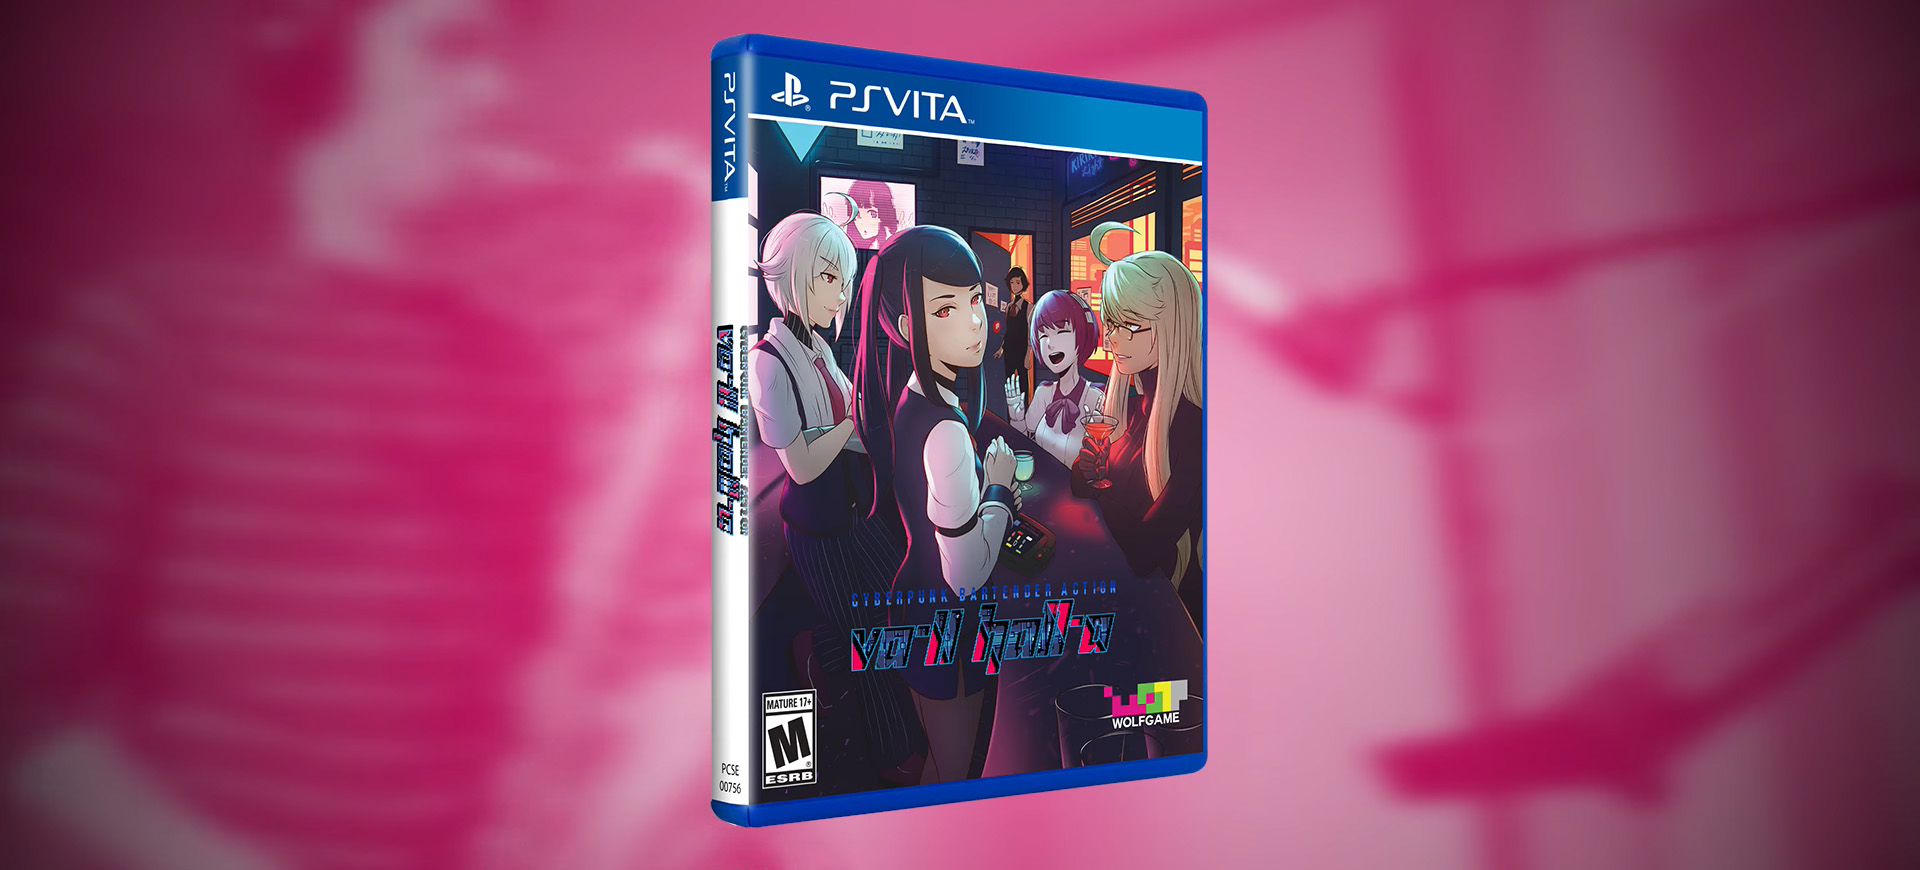 VA-11 Hall-A: Cyberpunk Bartender Action sắp có mặt trên PlayStation Vita - Tin Game